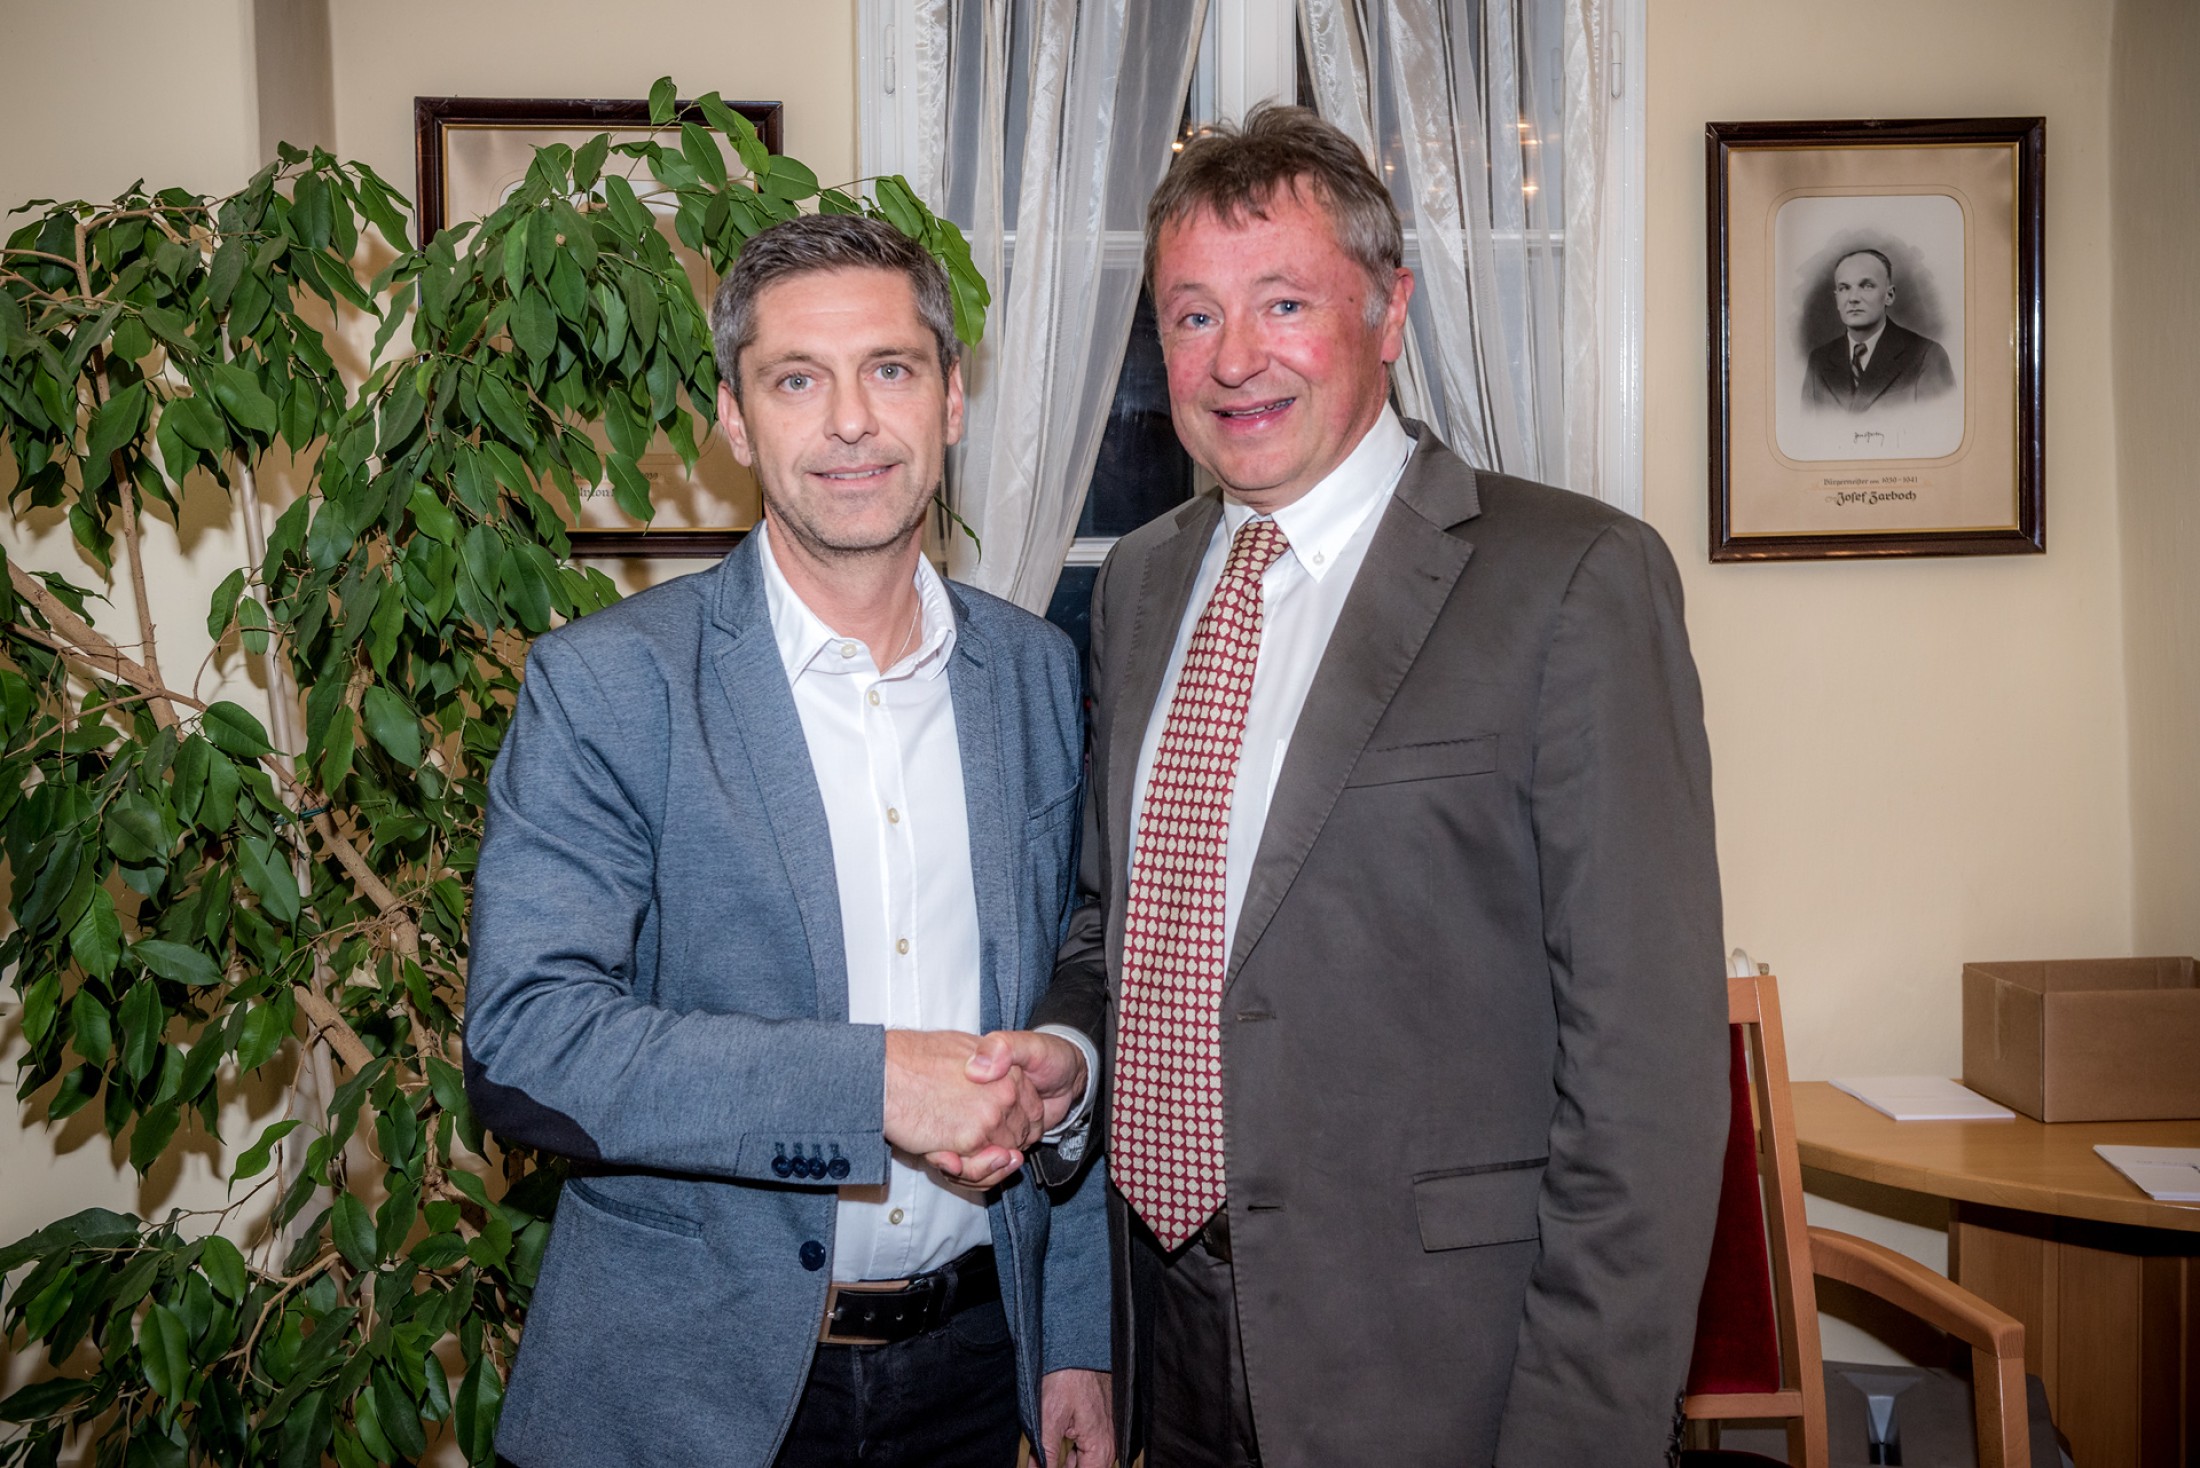 Bürgermeister Ing. Martin Falk gratuliert dem neuen Gemeinderat Günther Wieland